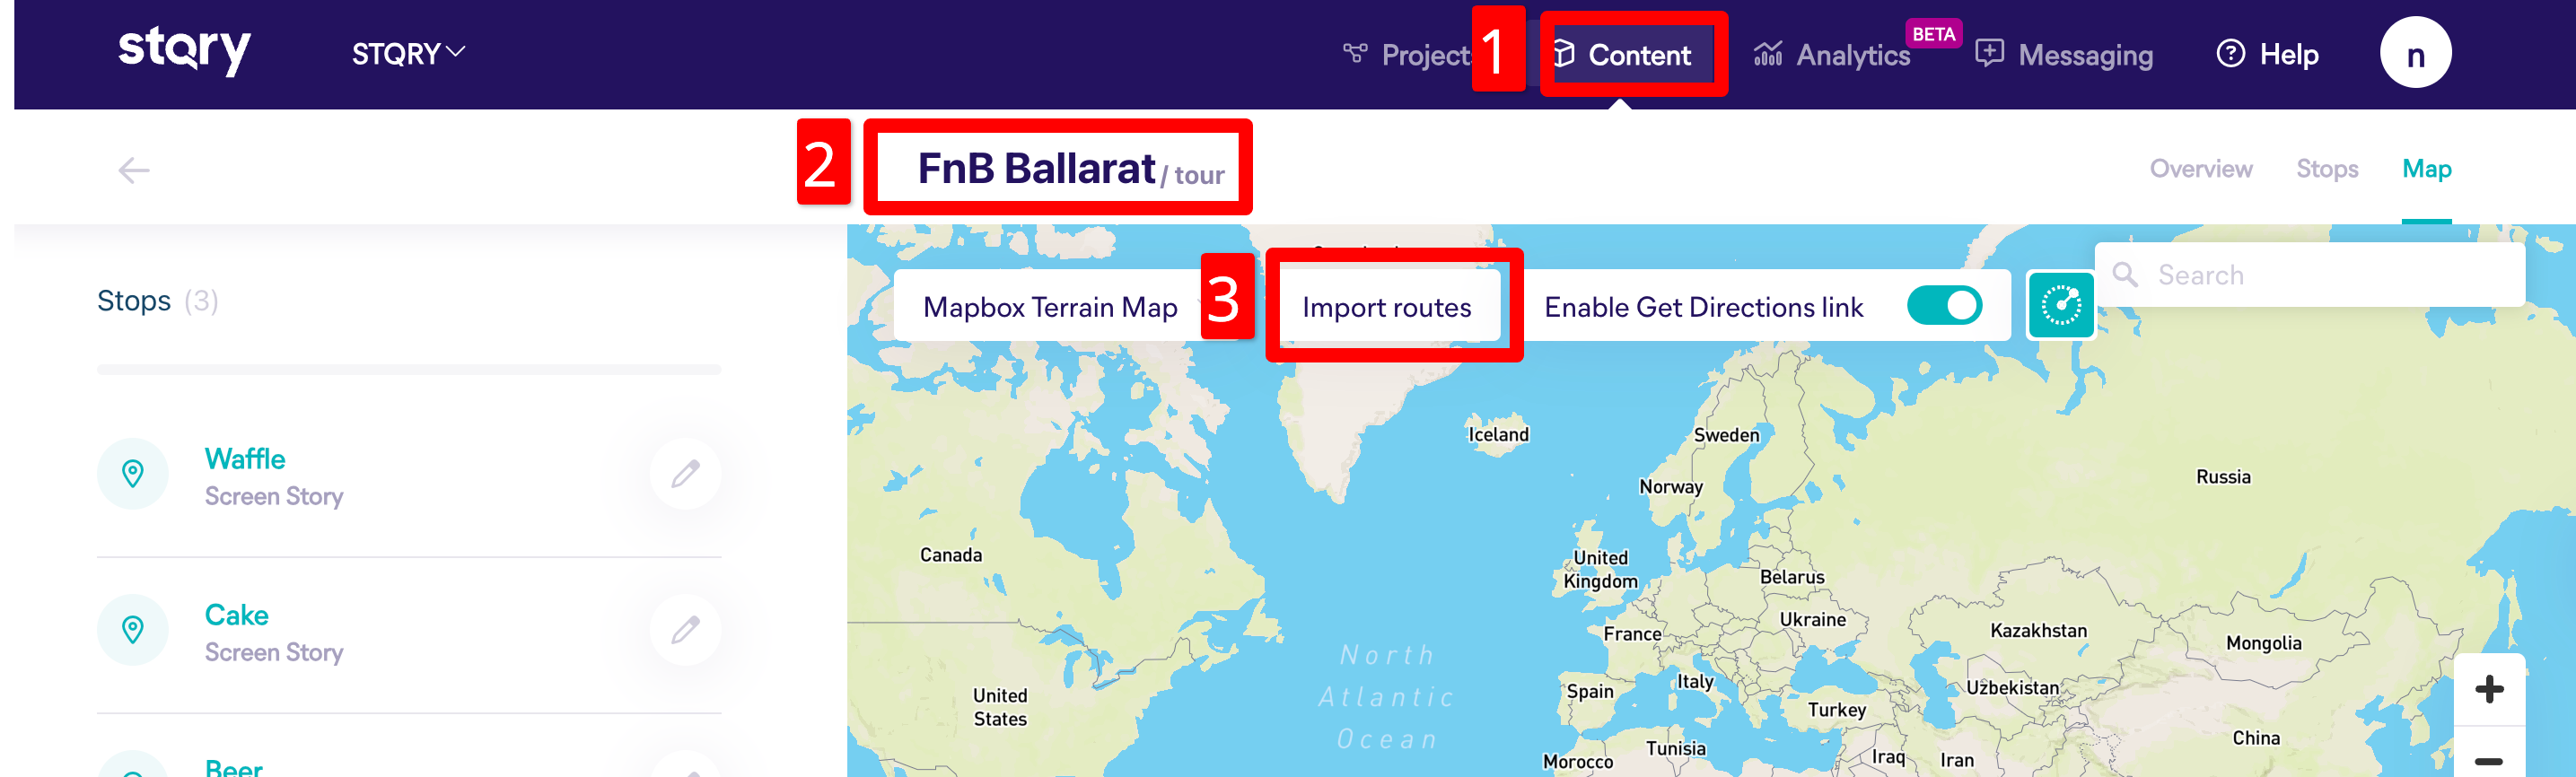 Collection-FnB-Ballarat-Map (1).png